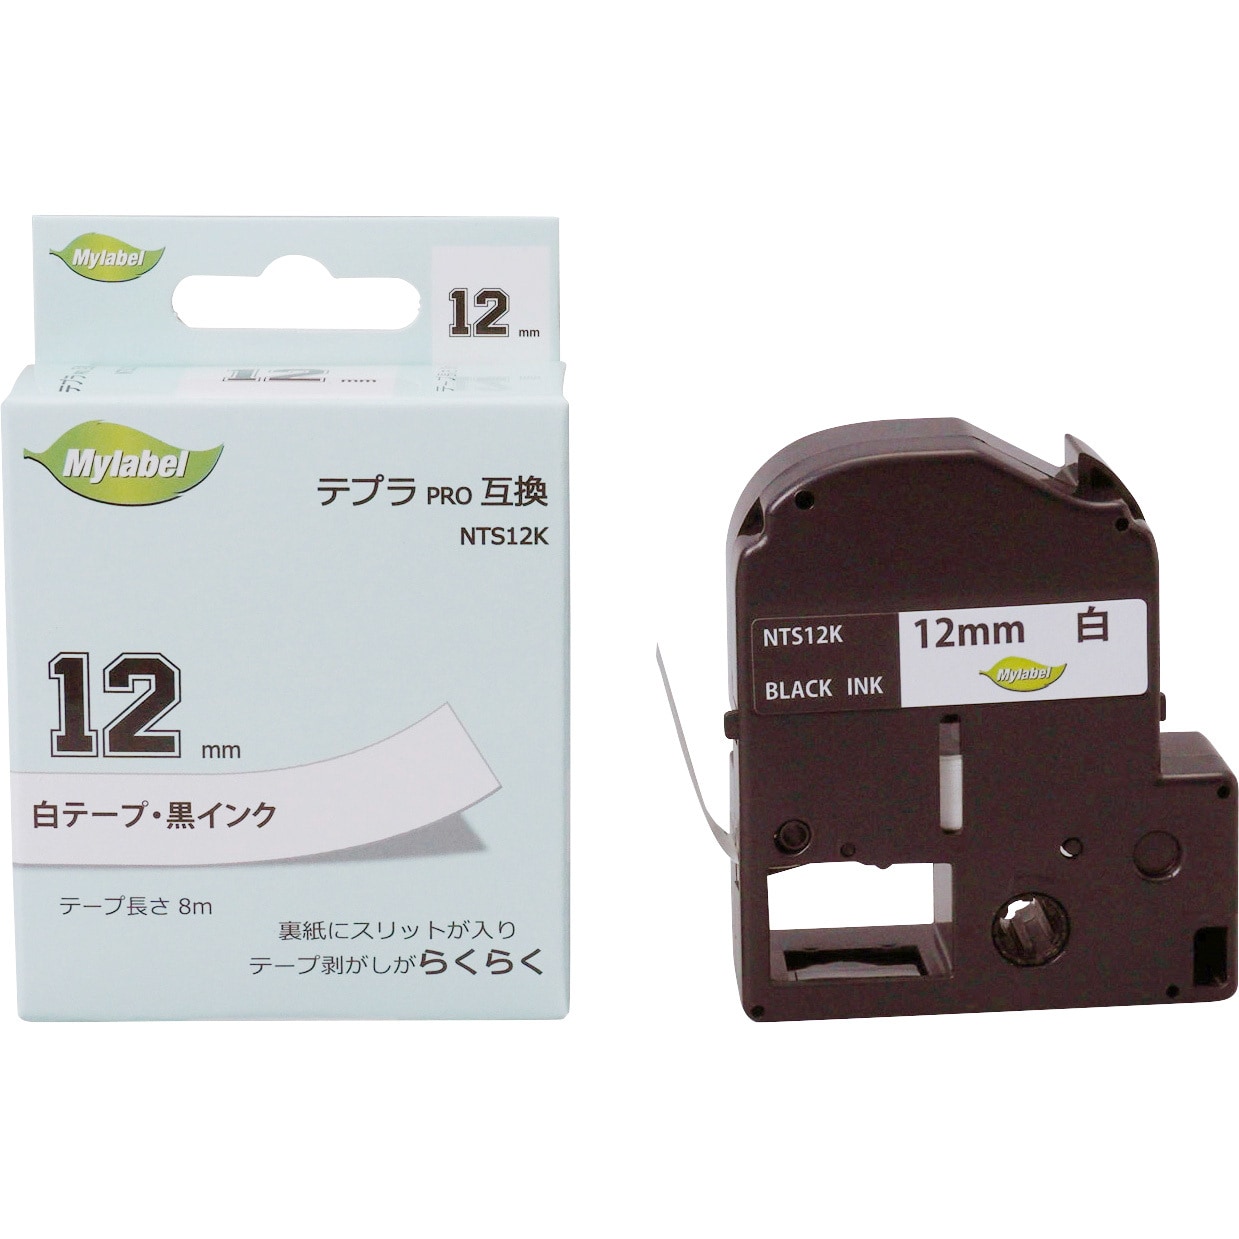 NTS12K Mylabel 互換テプラテープ 1個 日本ナインスター 【通販サイト